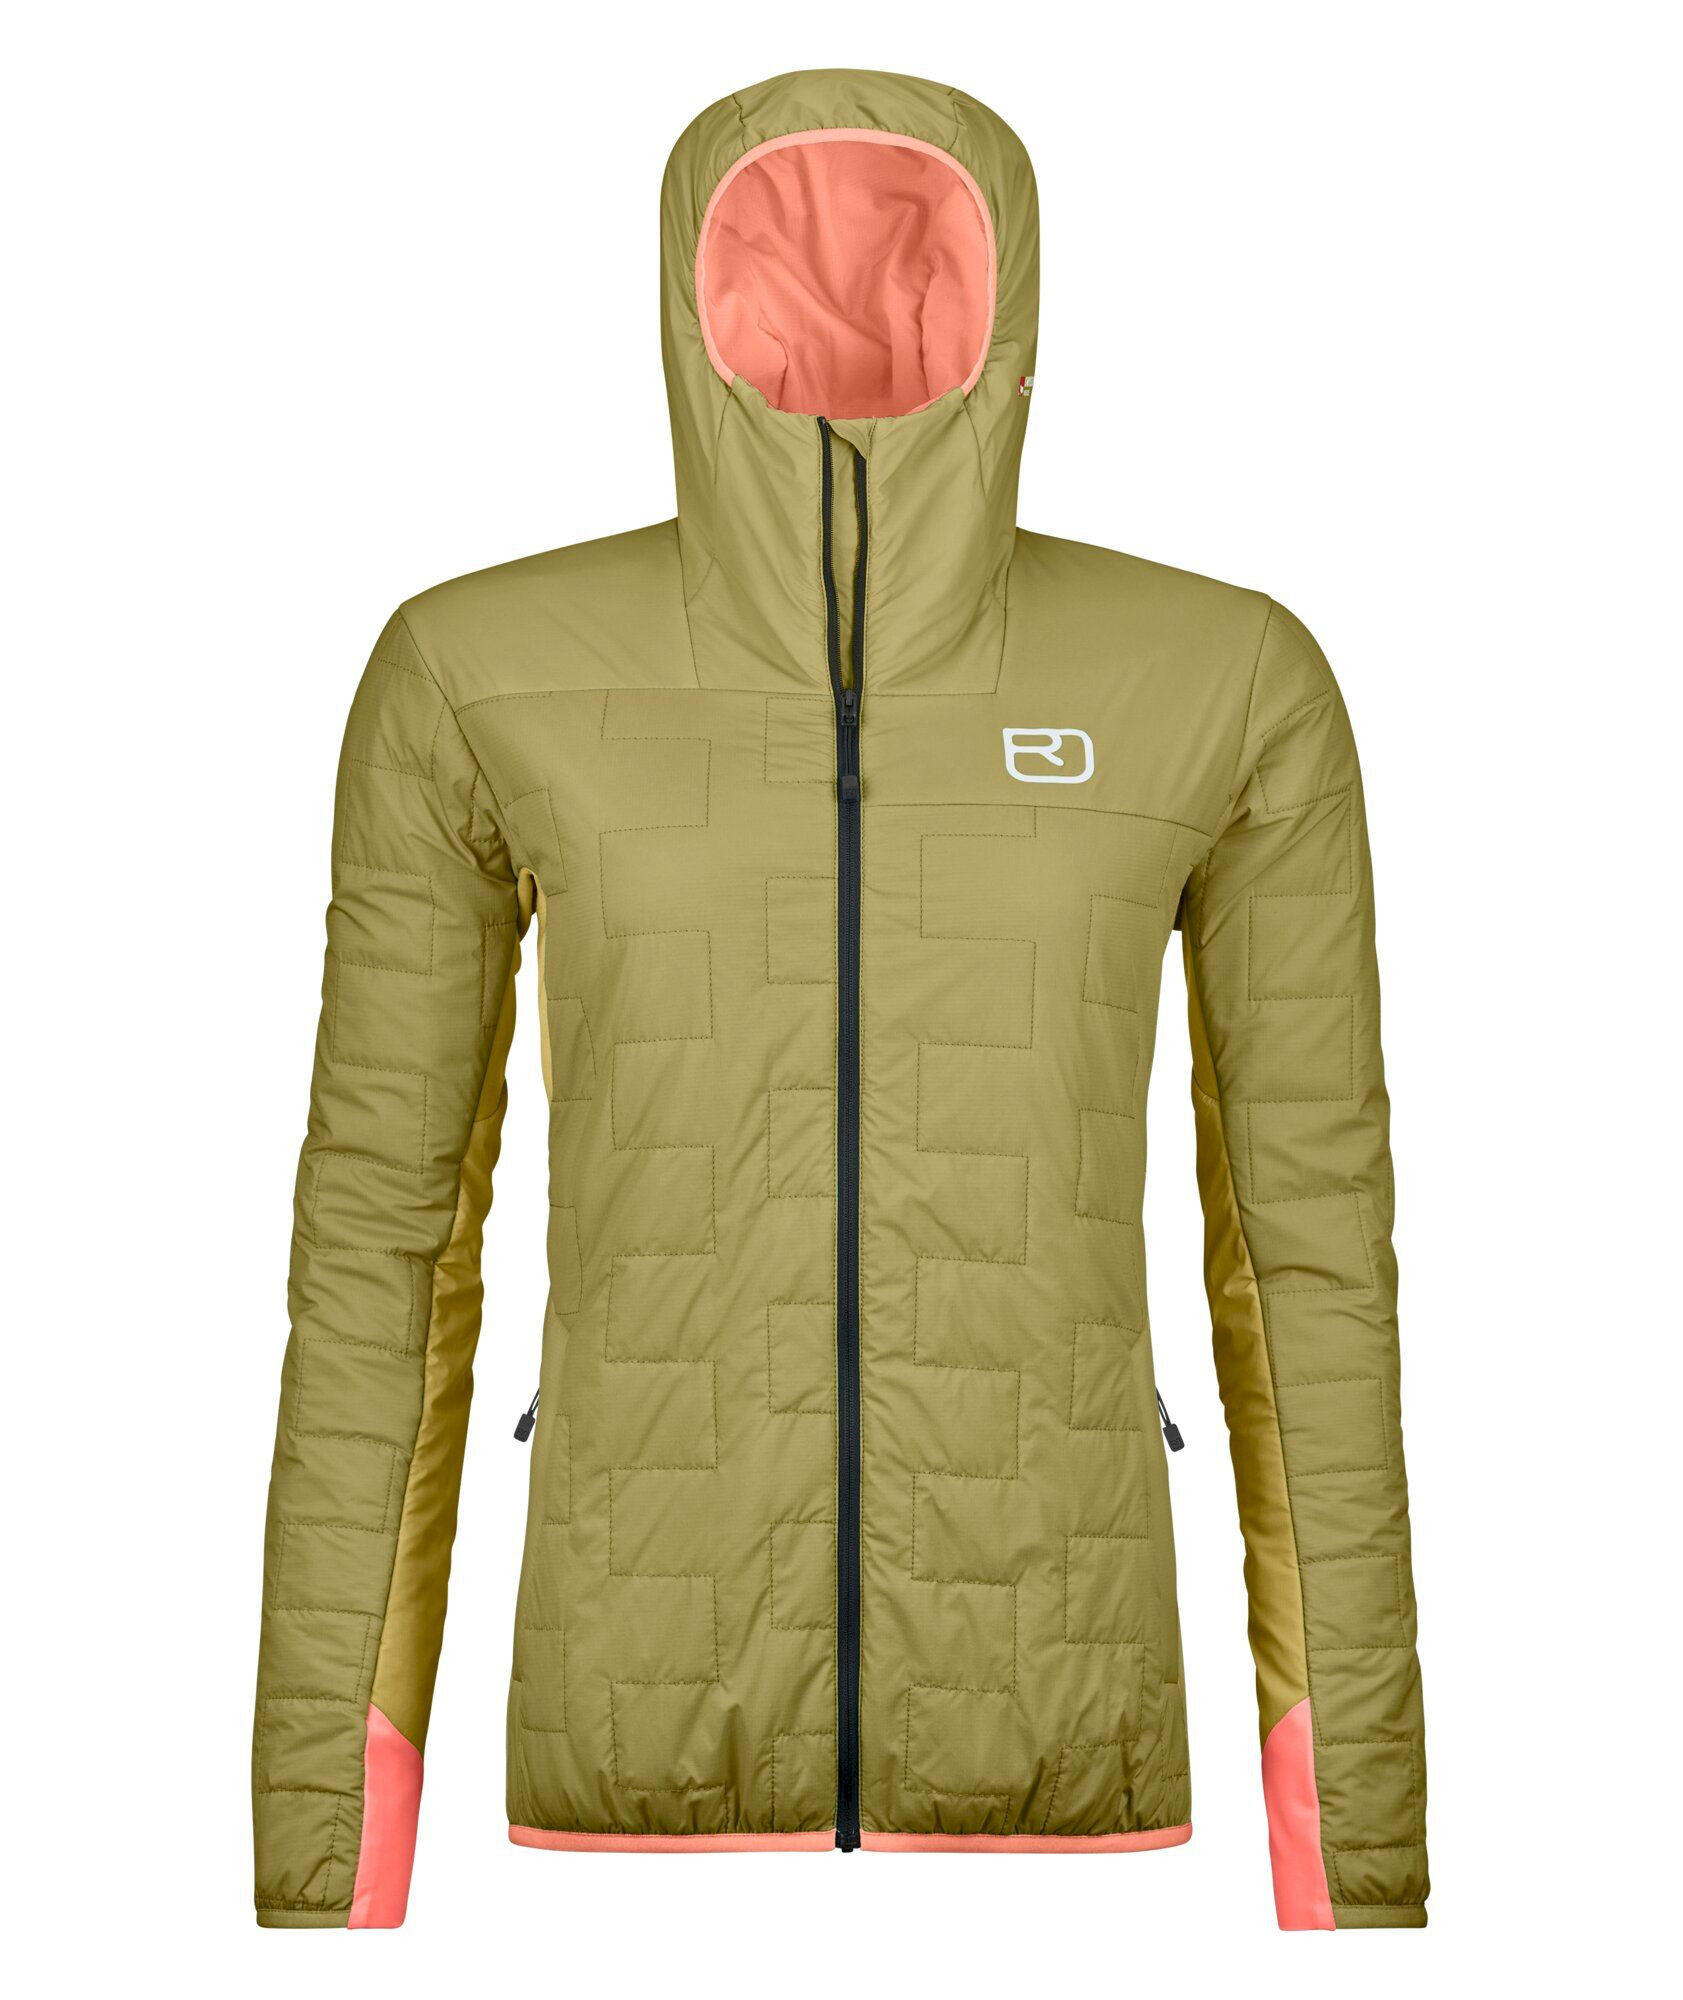 Ortovox Swisswool Piz Badus Jacket - Chaqueta de fibra sintética - Mujer